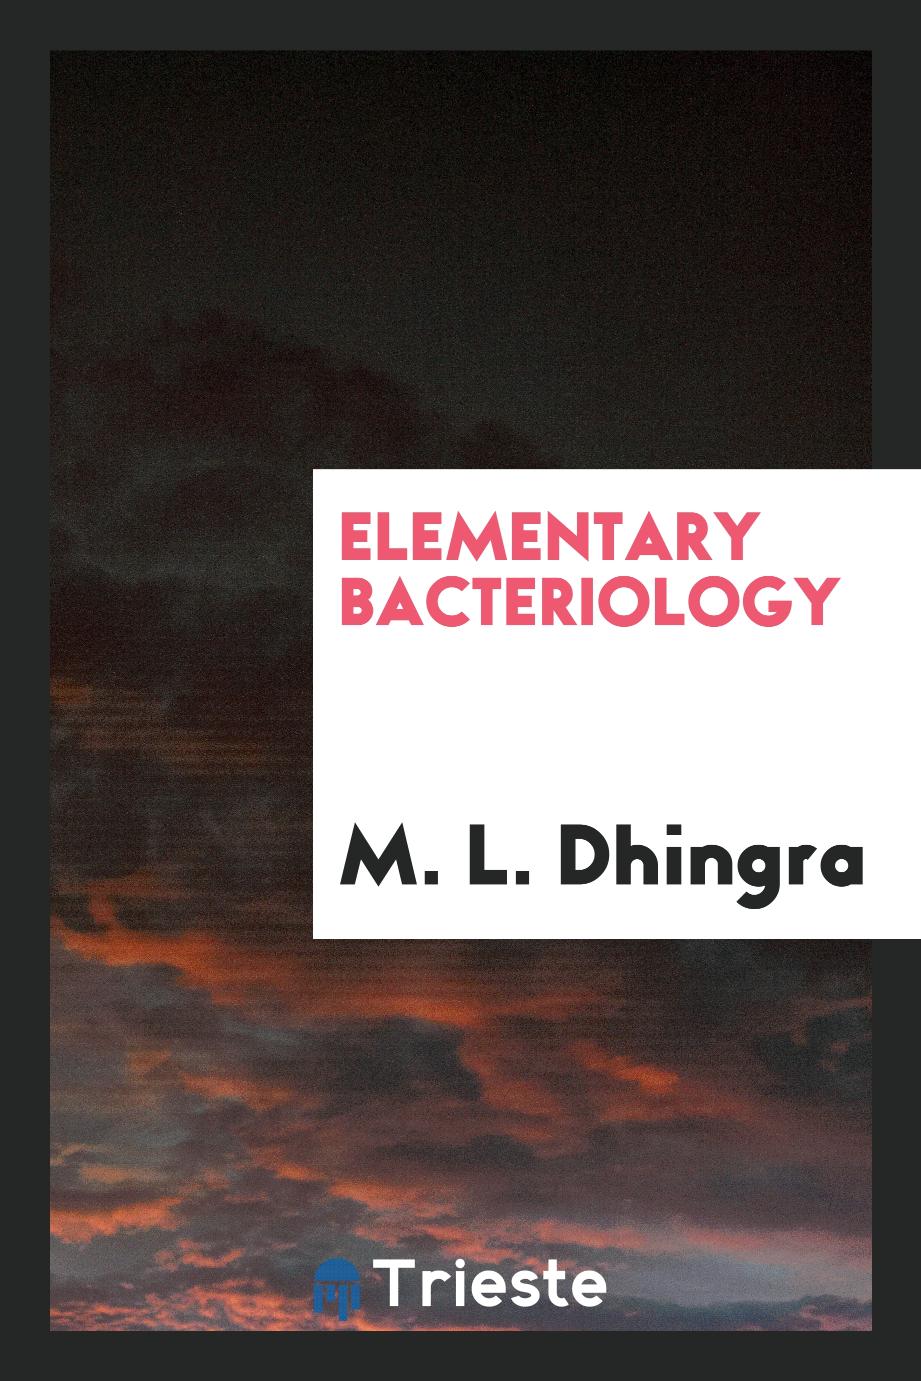 M. L. Dhingra - Elementary Bacteriology